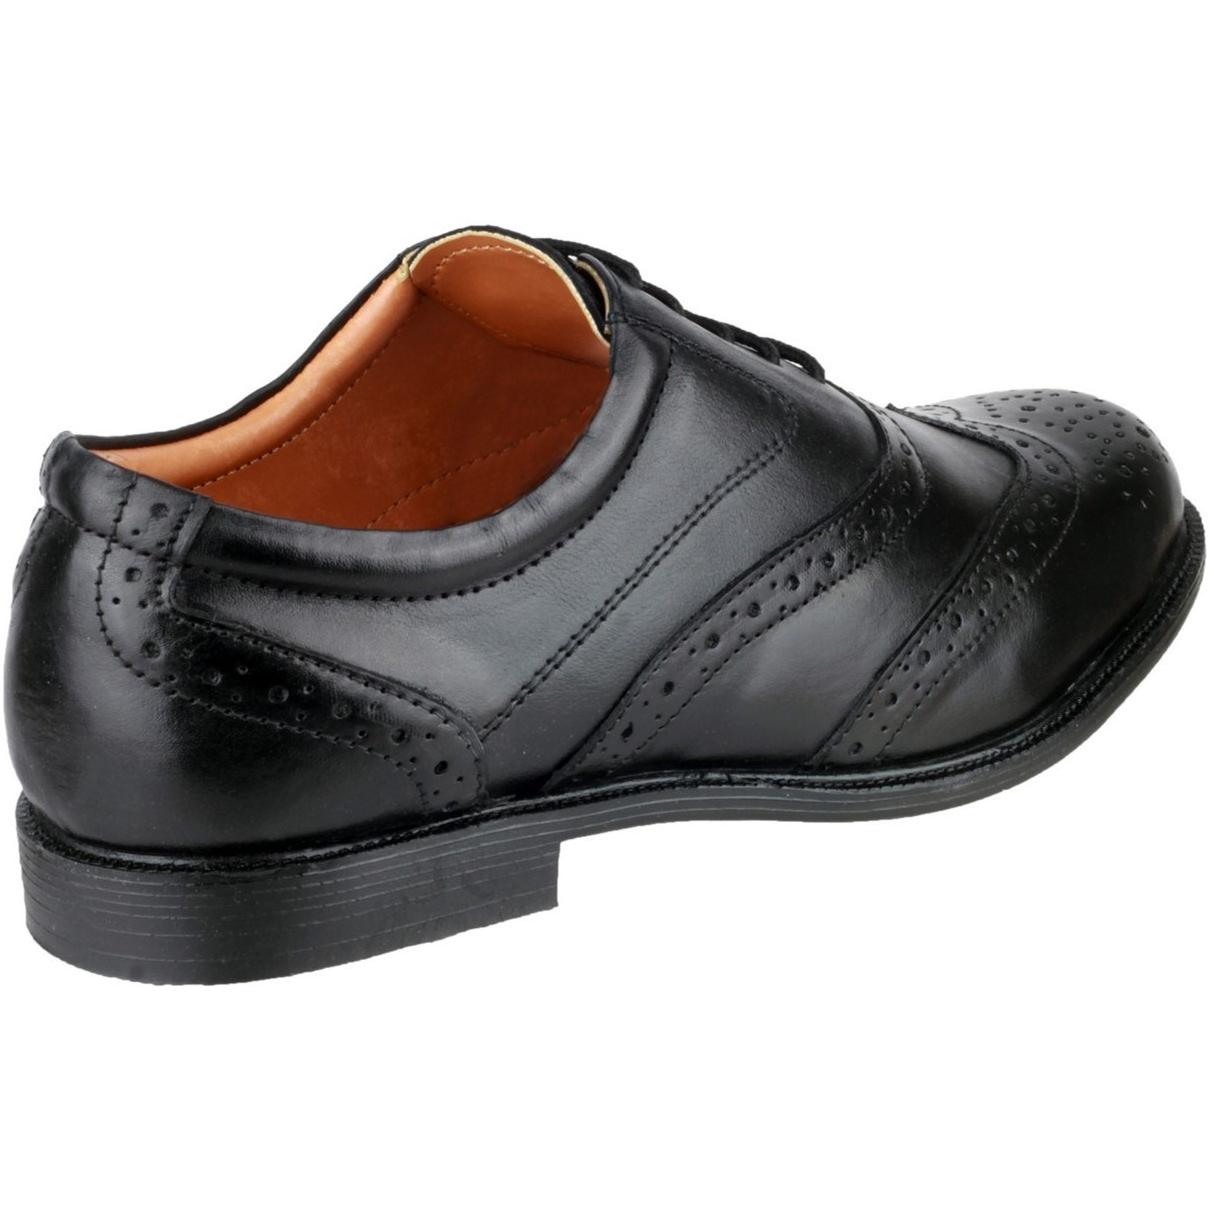 Amblers Liverpool Oxford Brogue Shoes